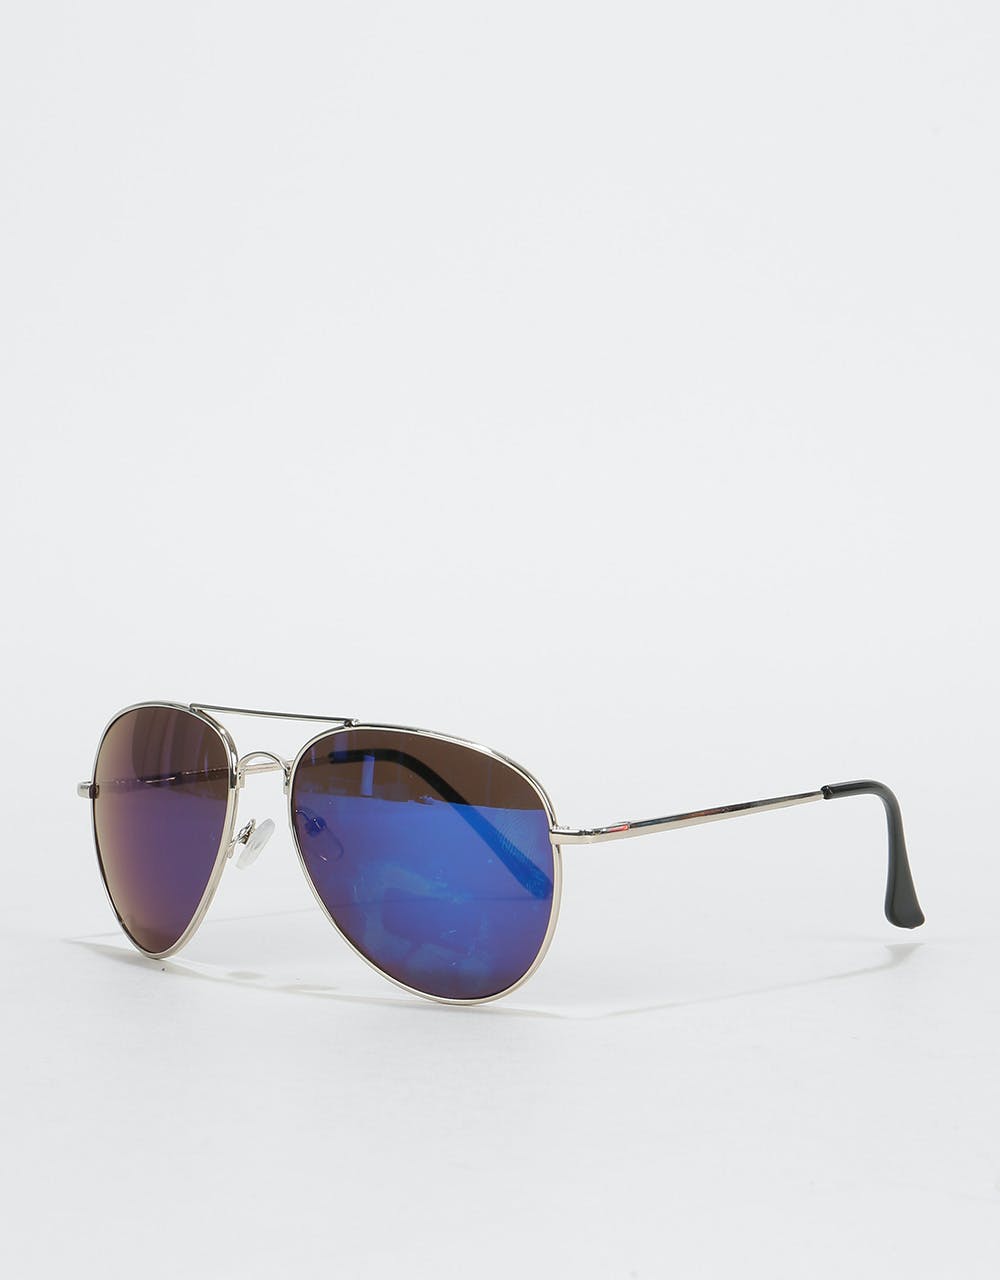 Route One Aviator Sunglasses - Silver/Blue